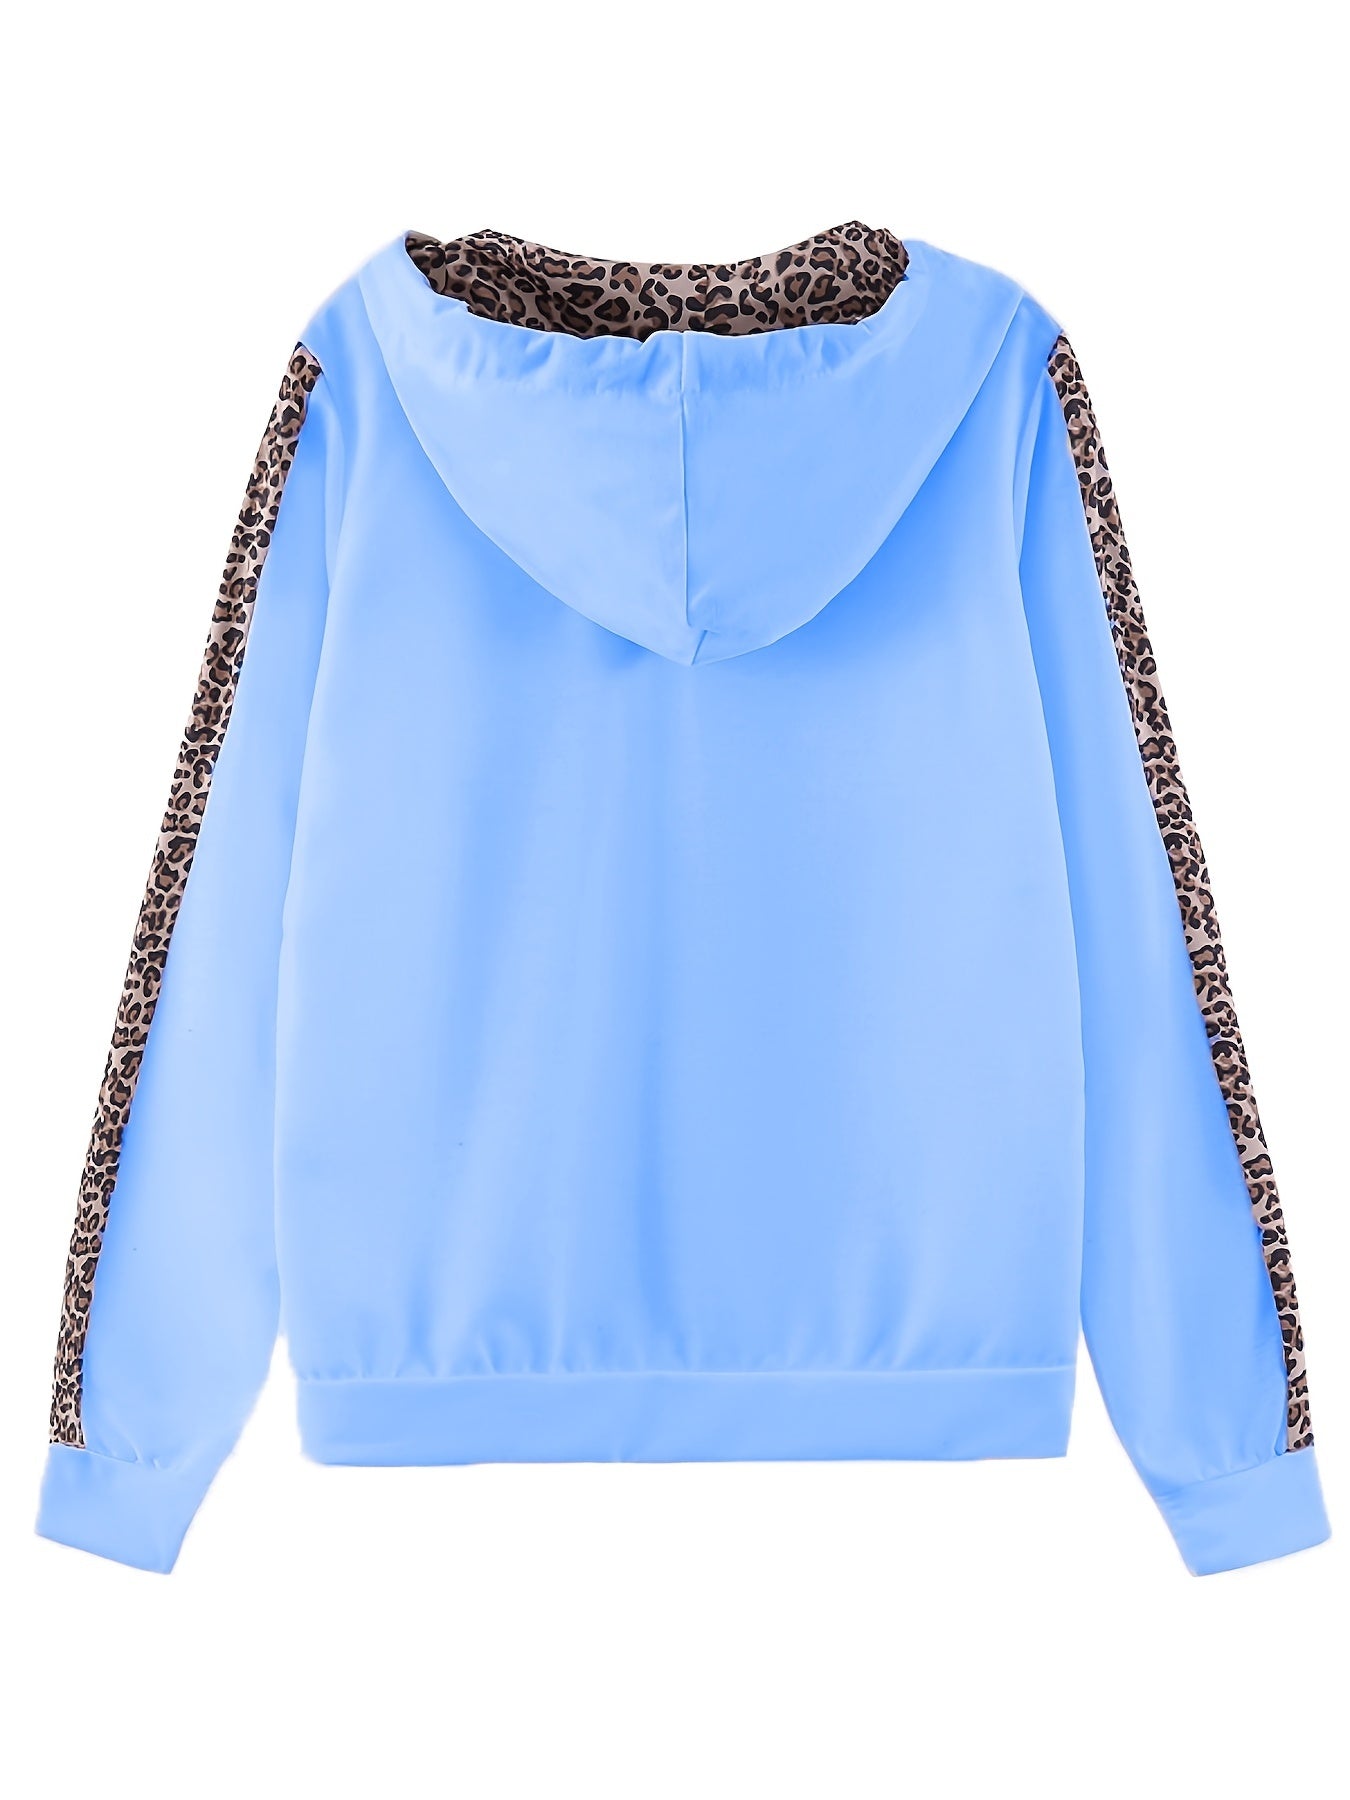 Leopard Print Two-piece Set, Zip Up Hoodie Sweatshirt & Casual High Waist Elastic Pants Outfits, Women's Clothing